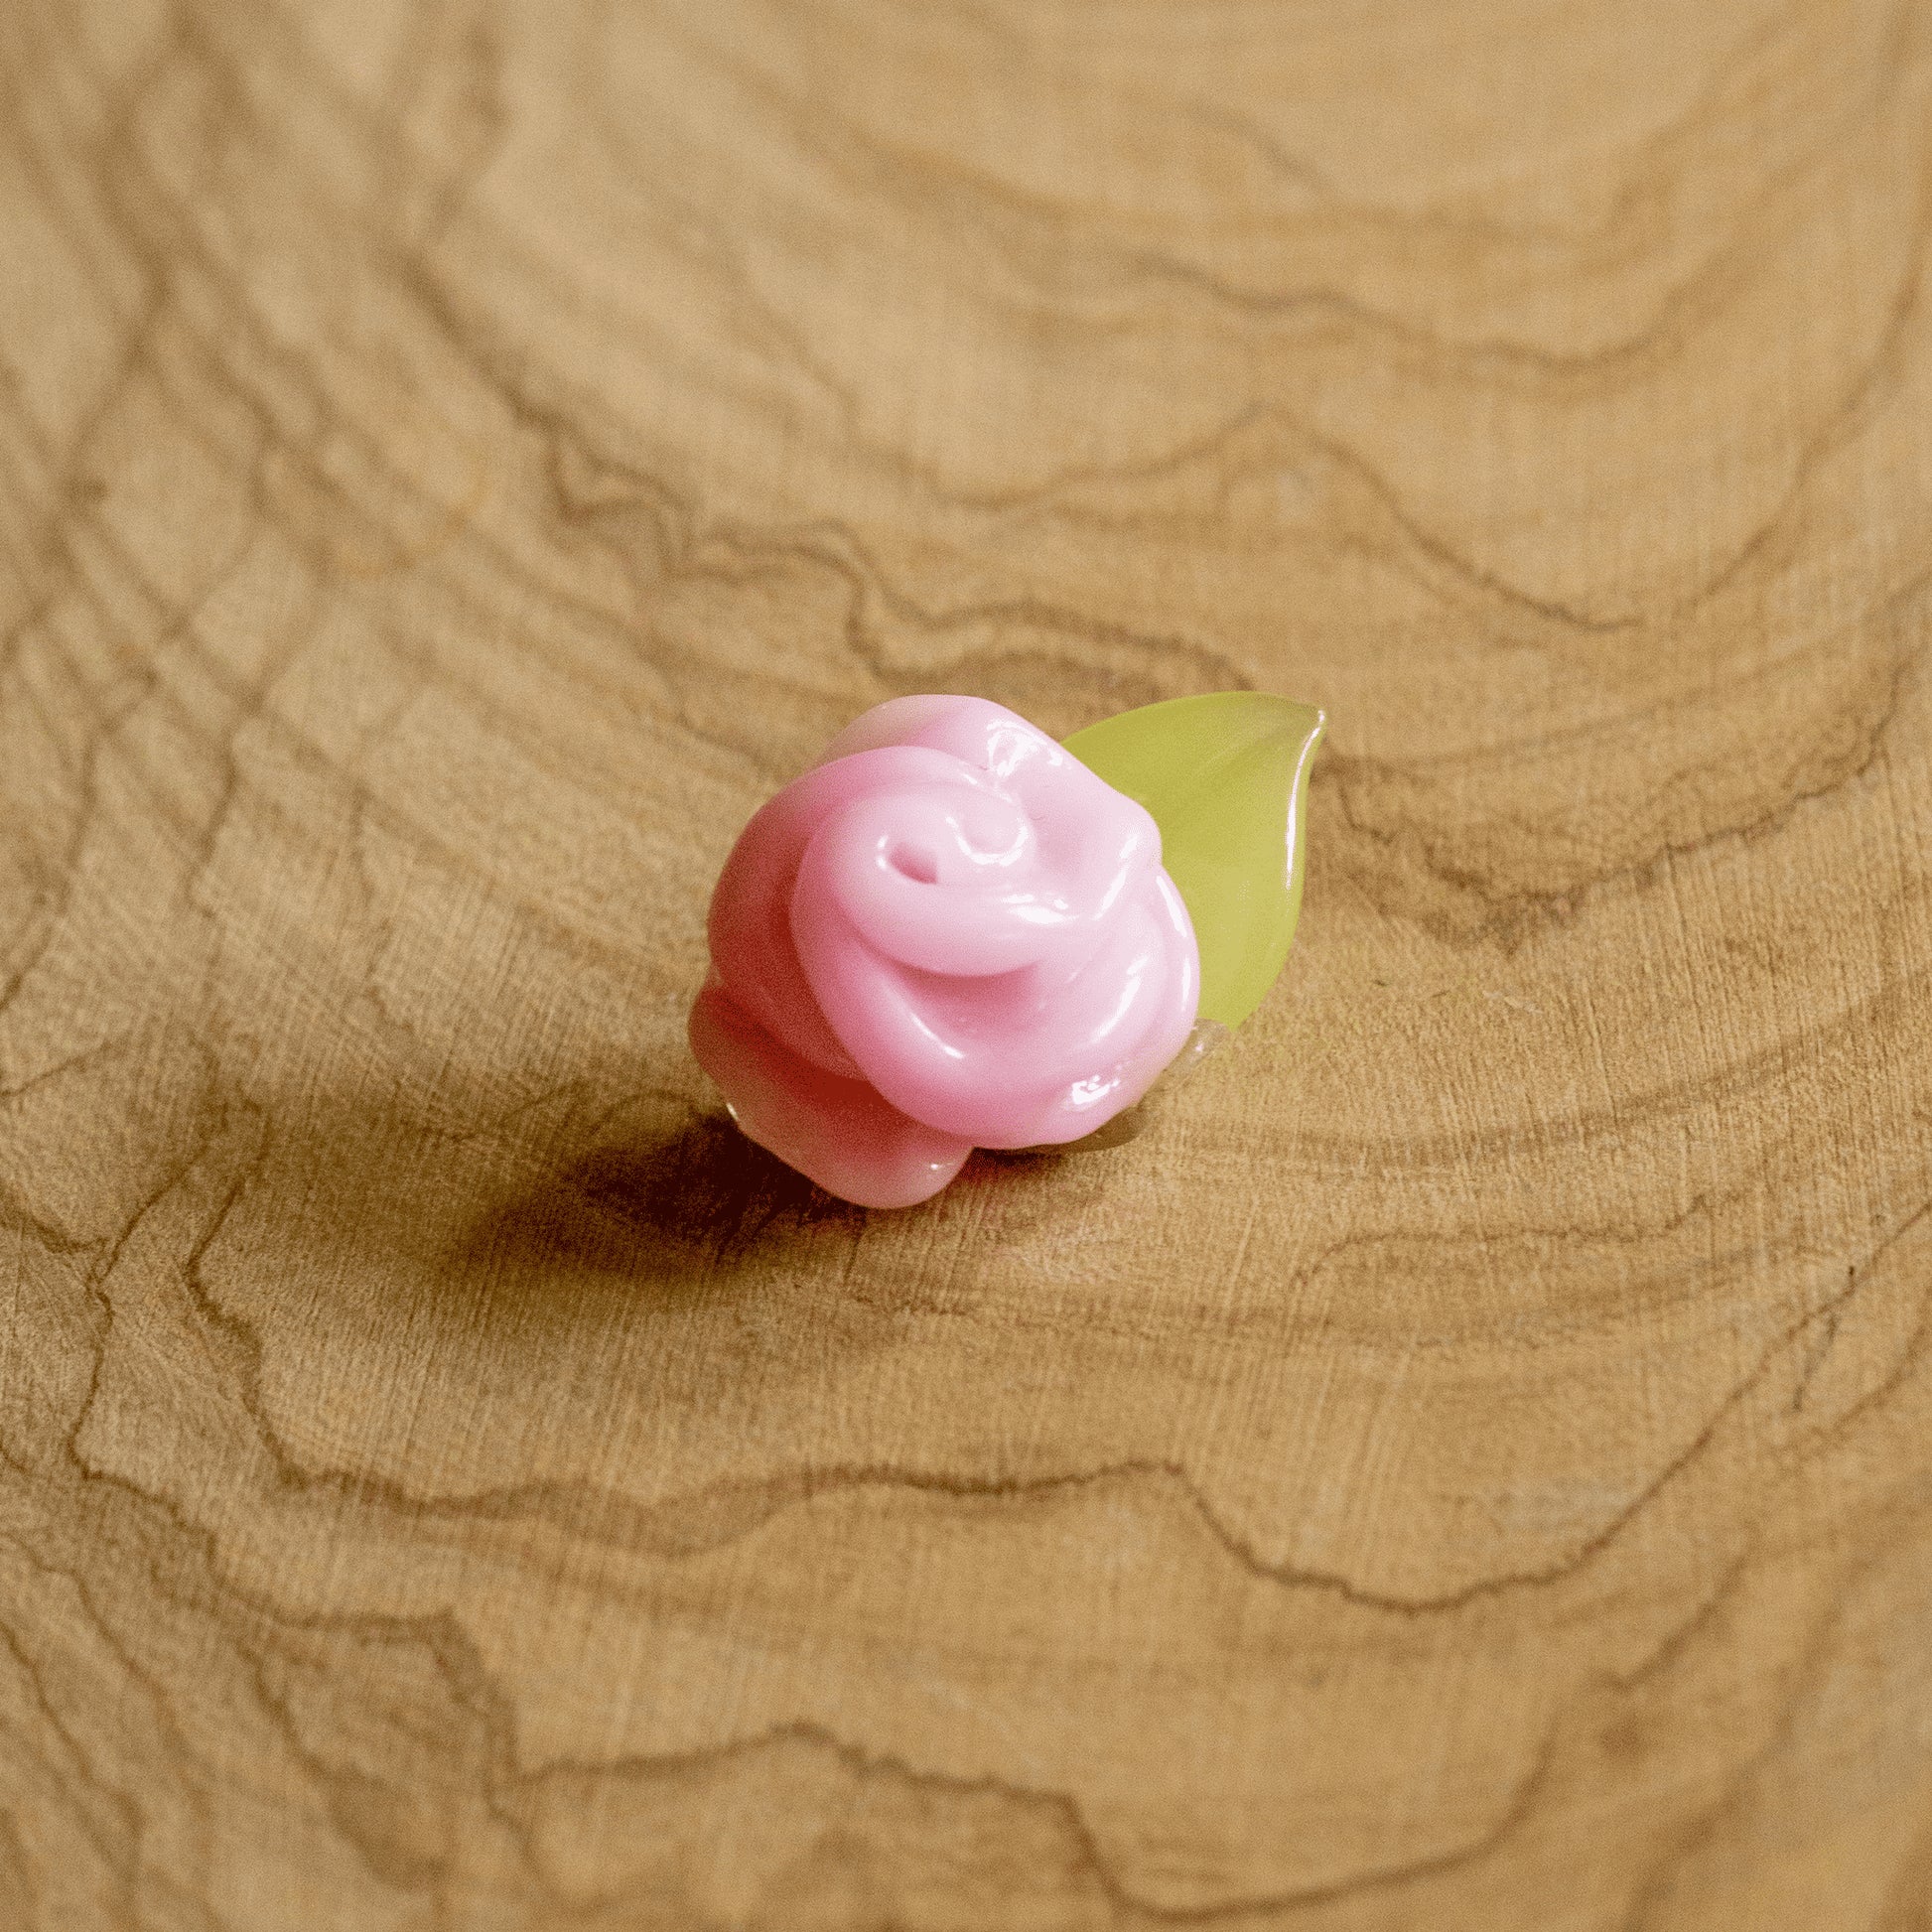 heady glass pendant - Light Pink Rose w/ Leaf Pendant by Sakibomb